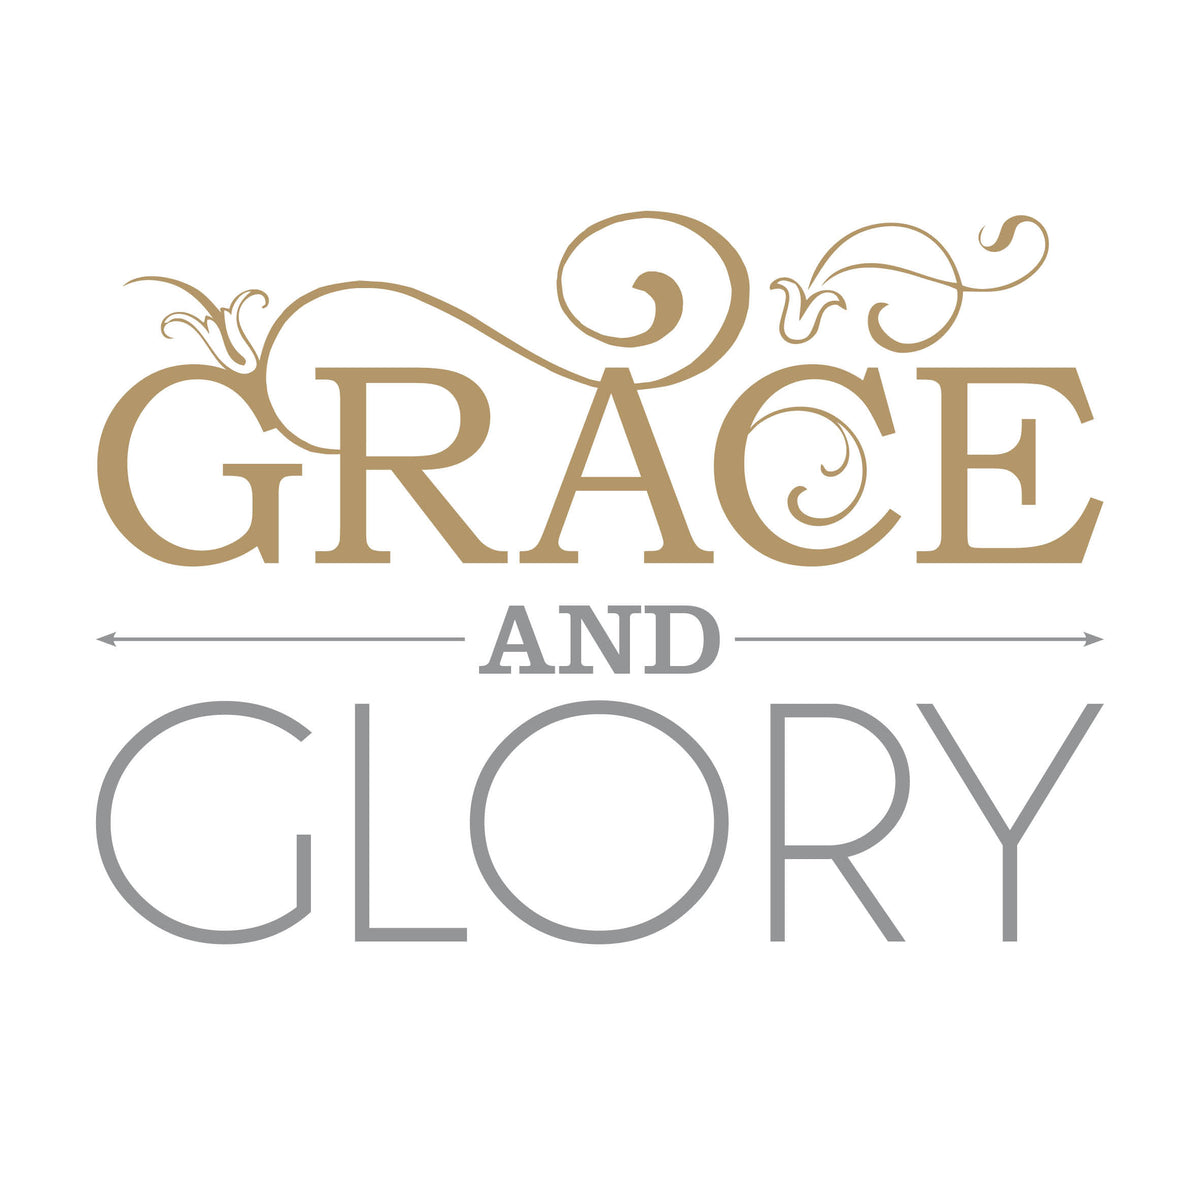 Grace & Glory